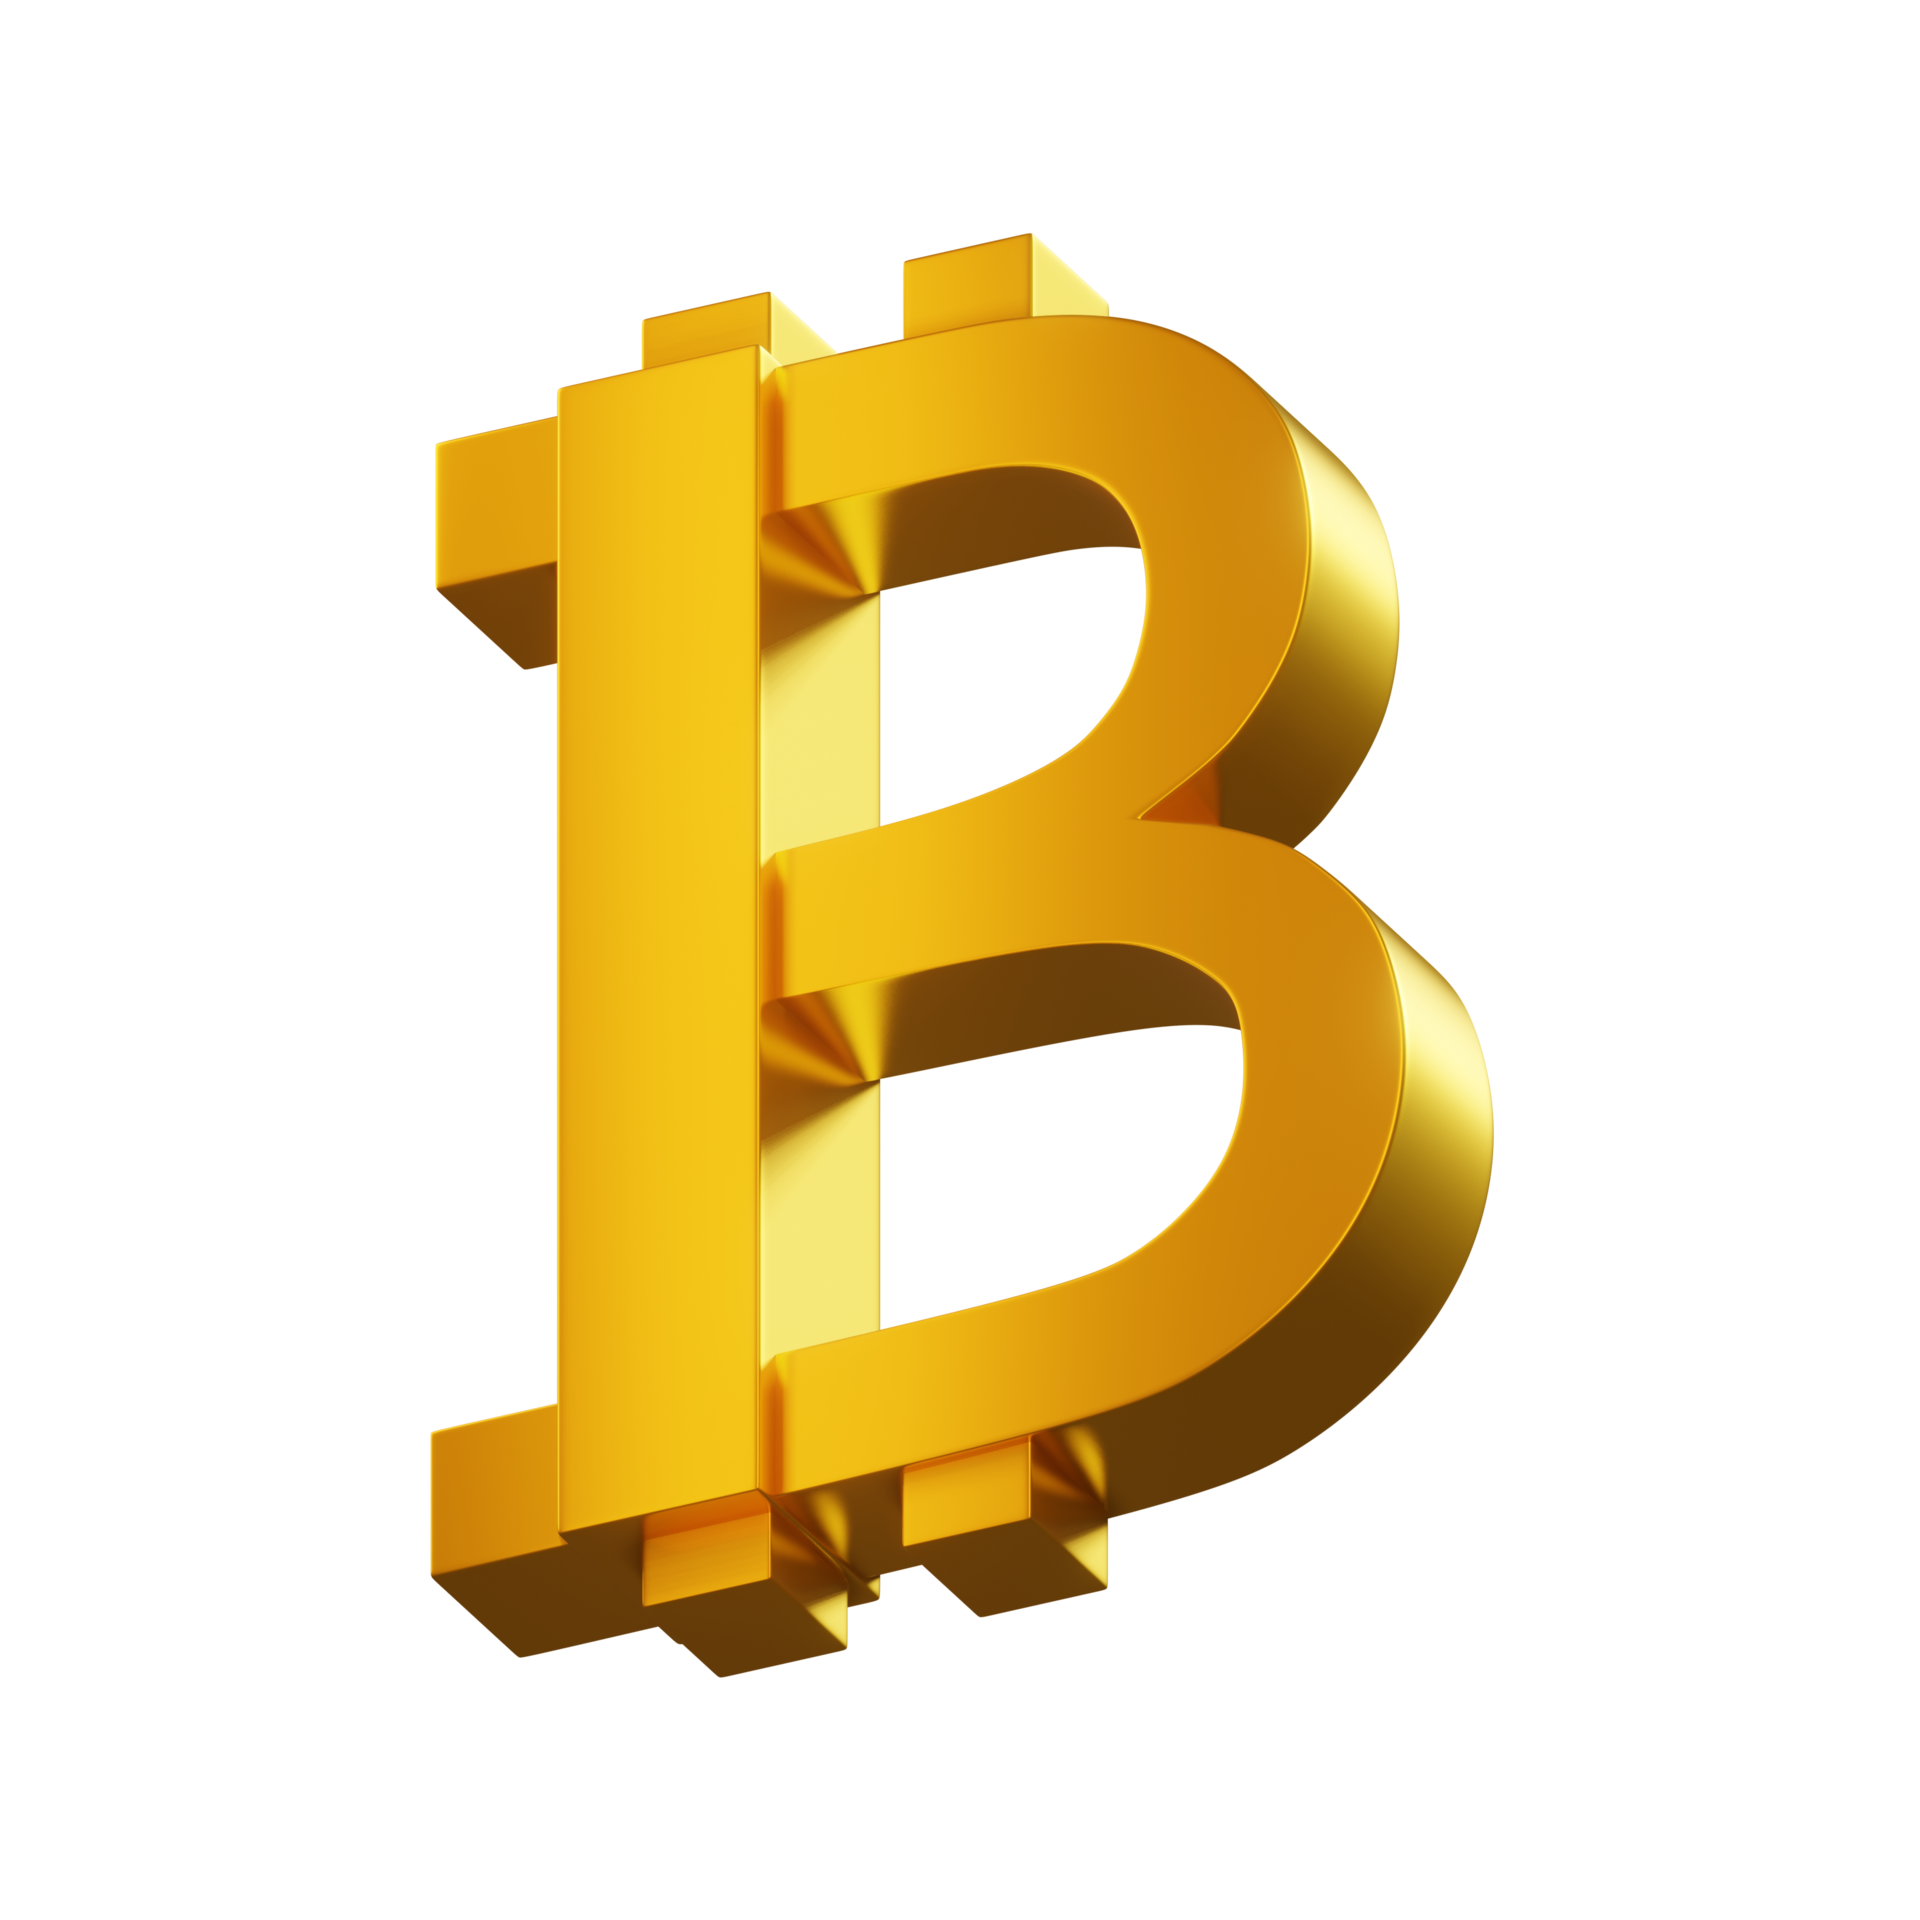 File:Bitcoin lightning logo.svg - Wikimedia Commons